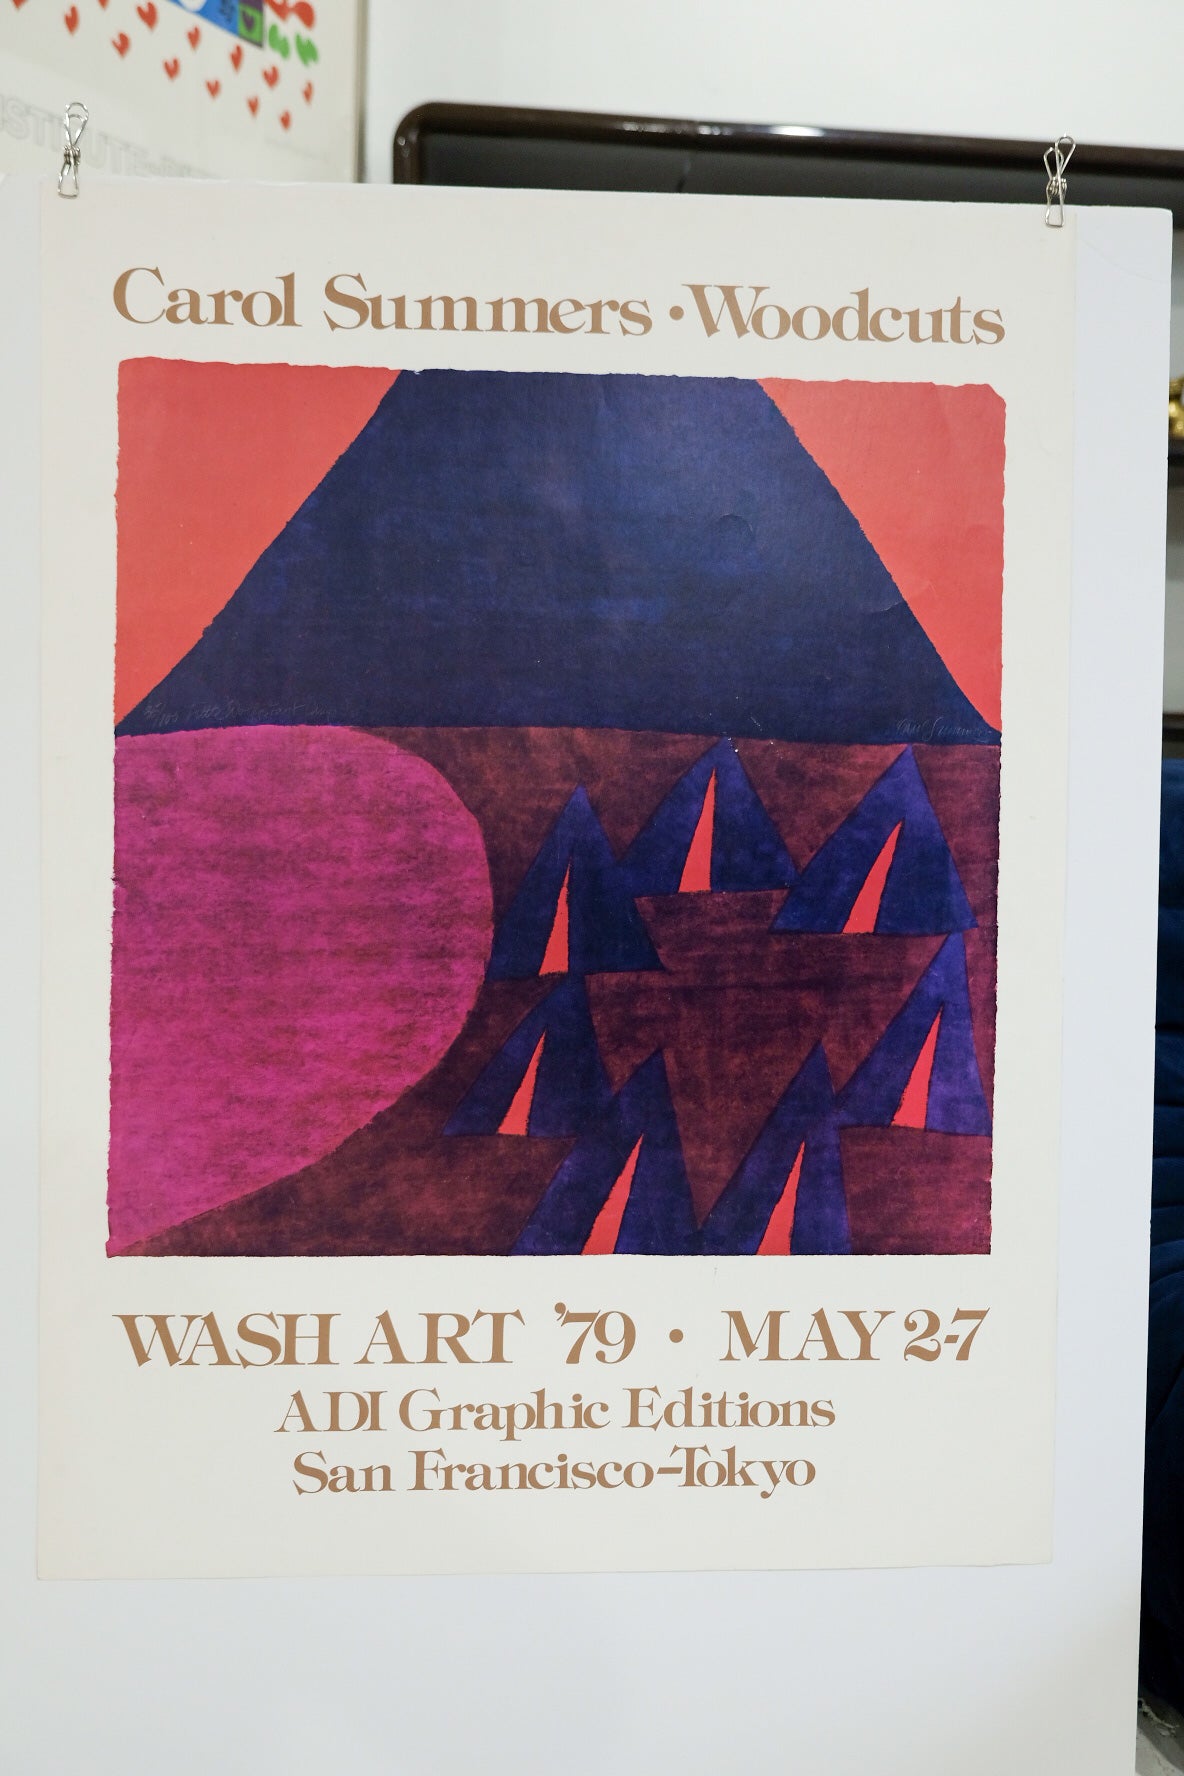 Carol Summers 1979 Woodcut ADI Graphic Editions